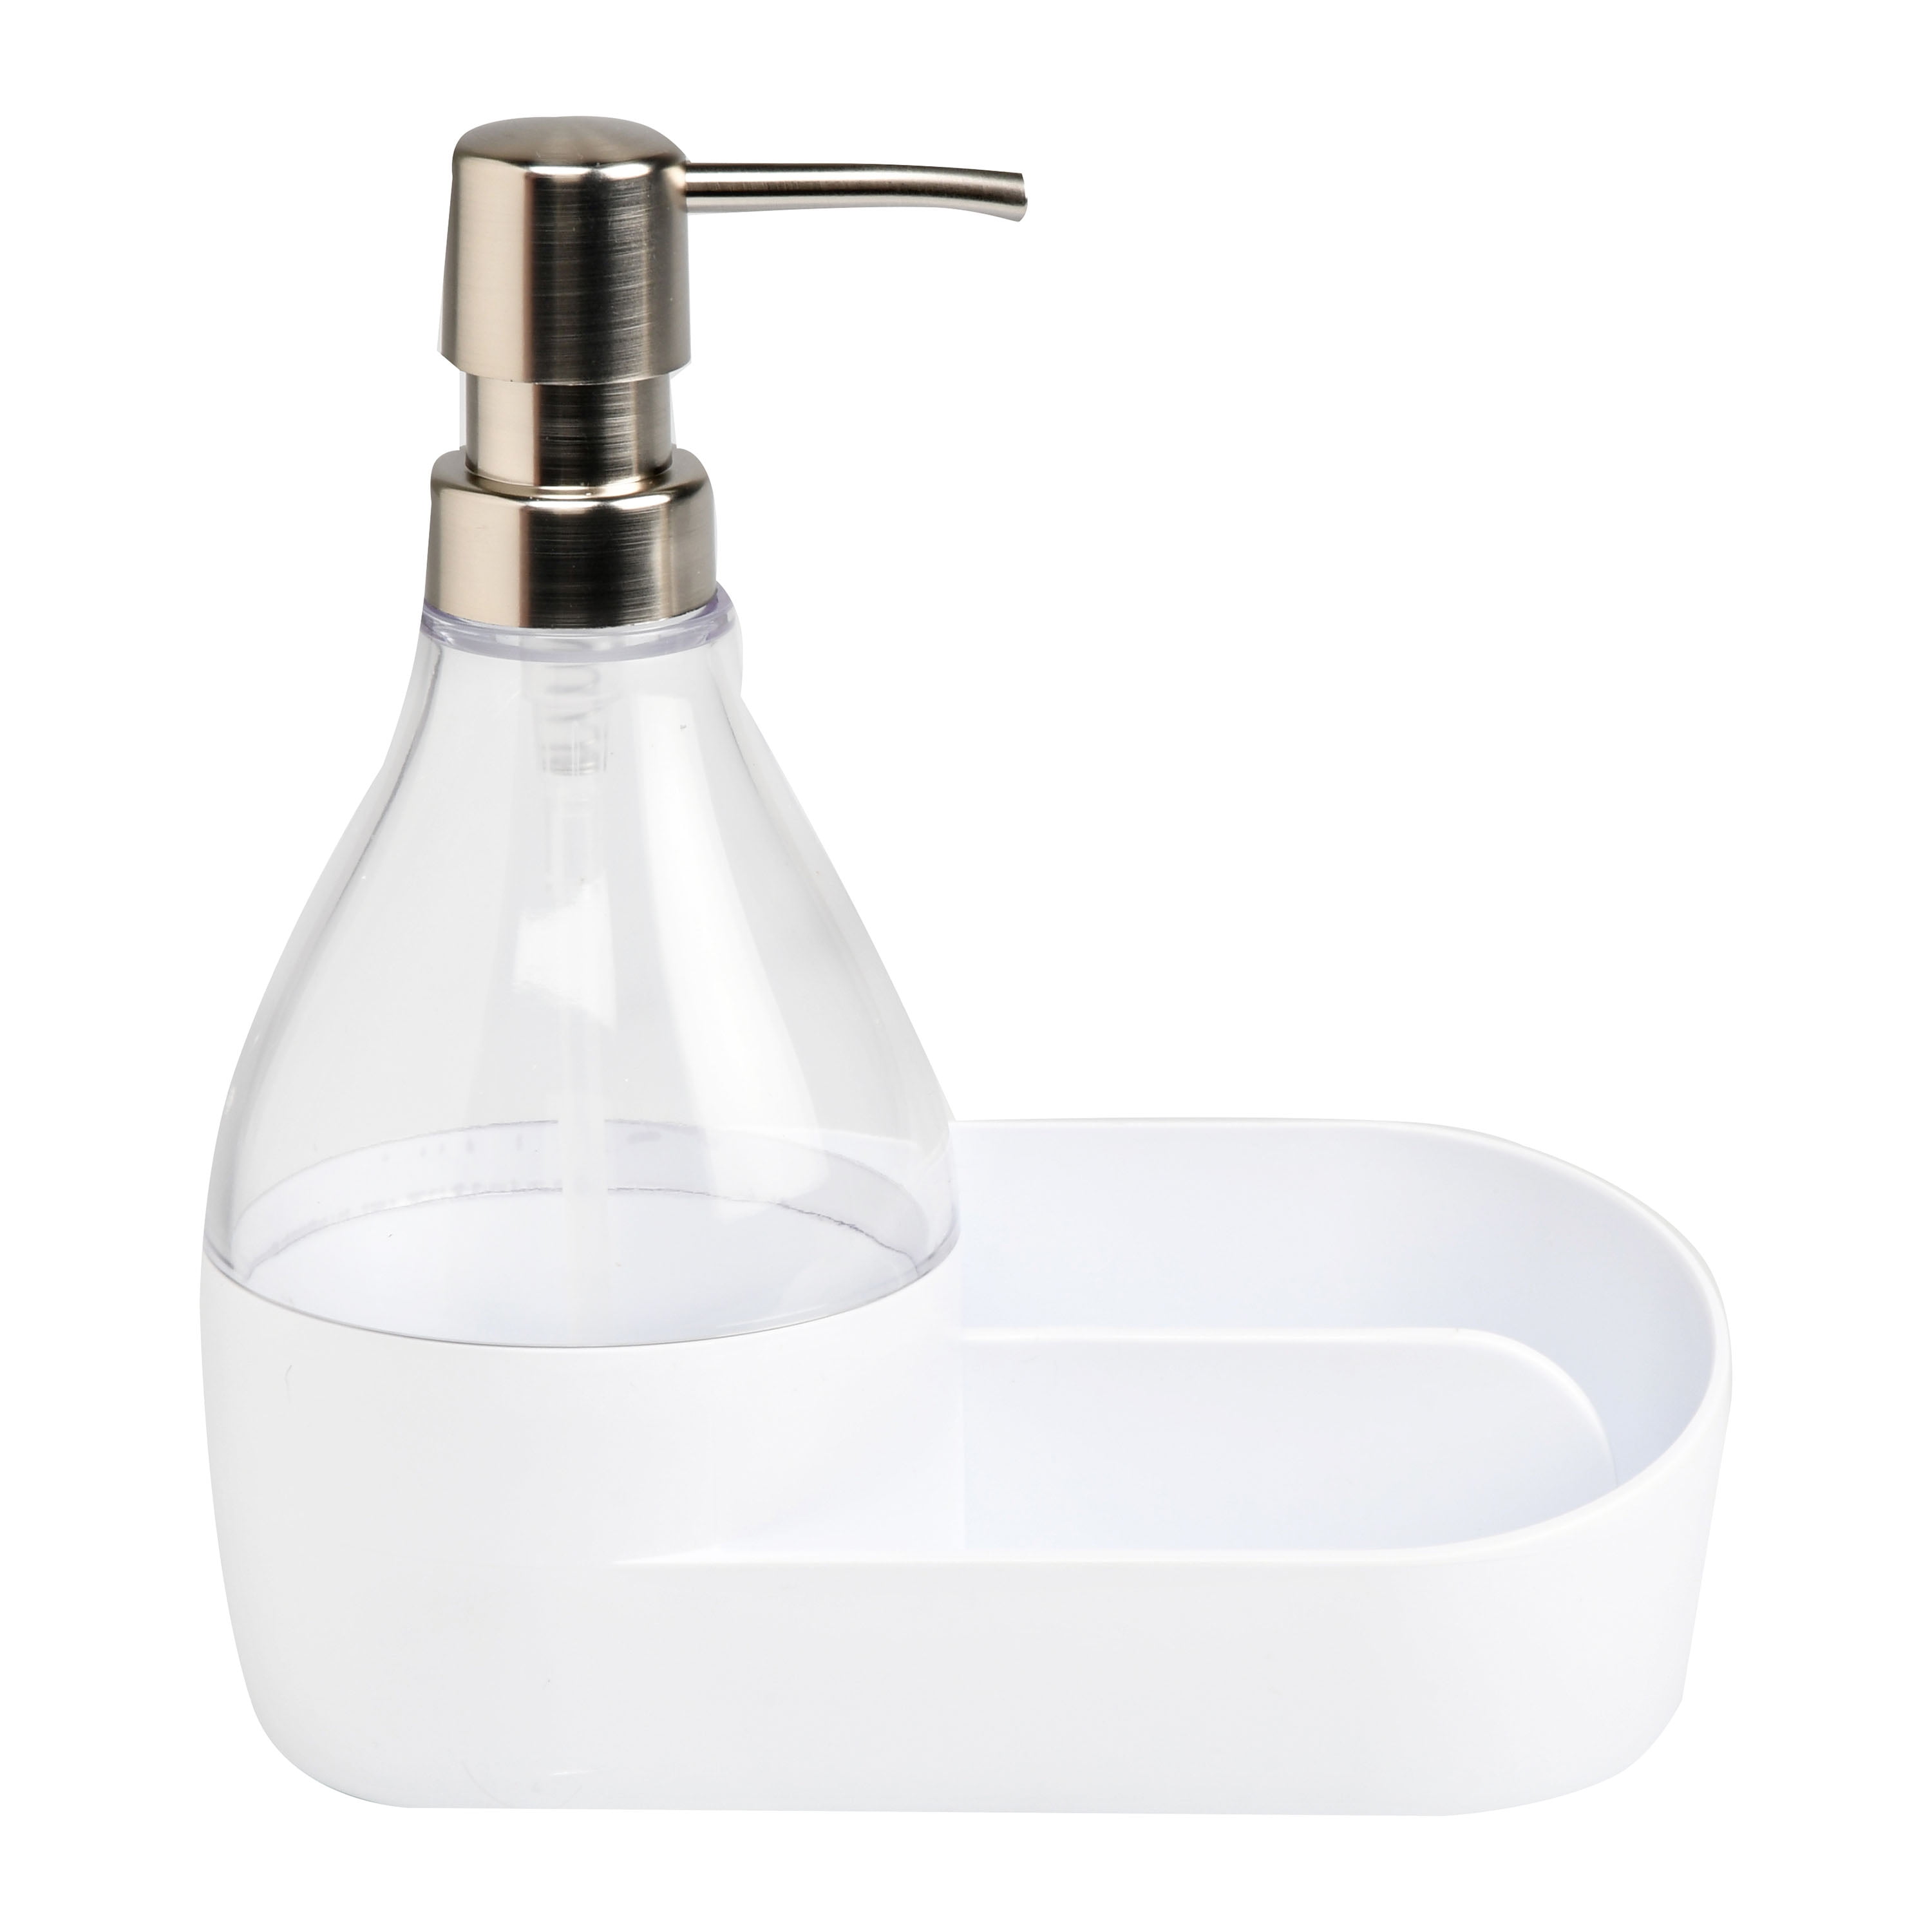 IPPINKA Push Dish Soap Dispenser, White, Sustainable